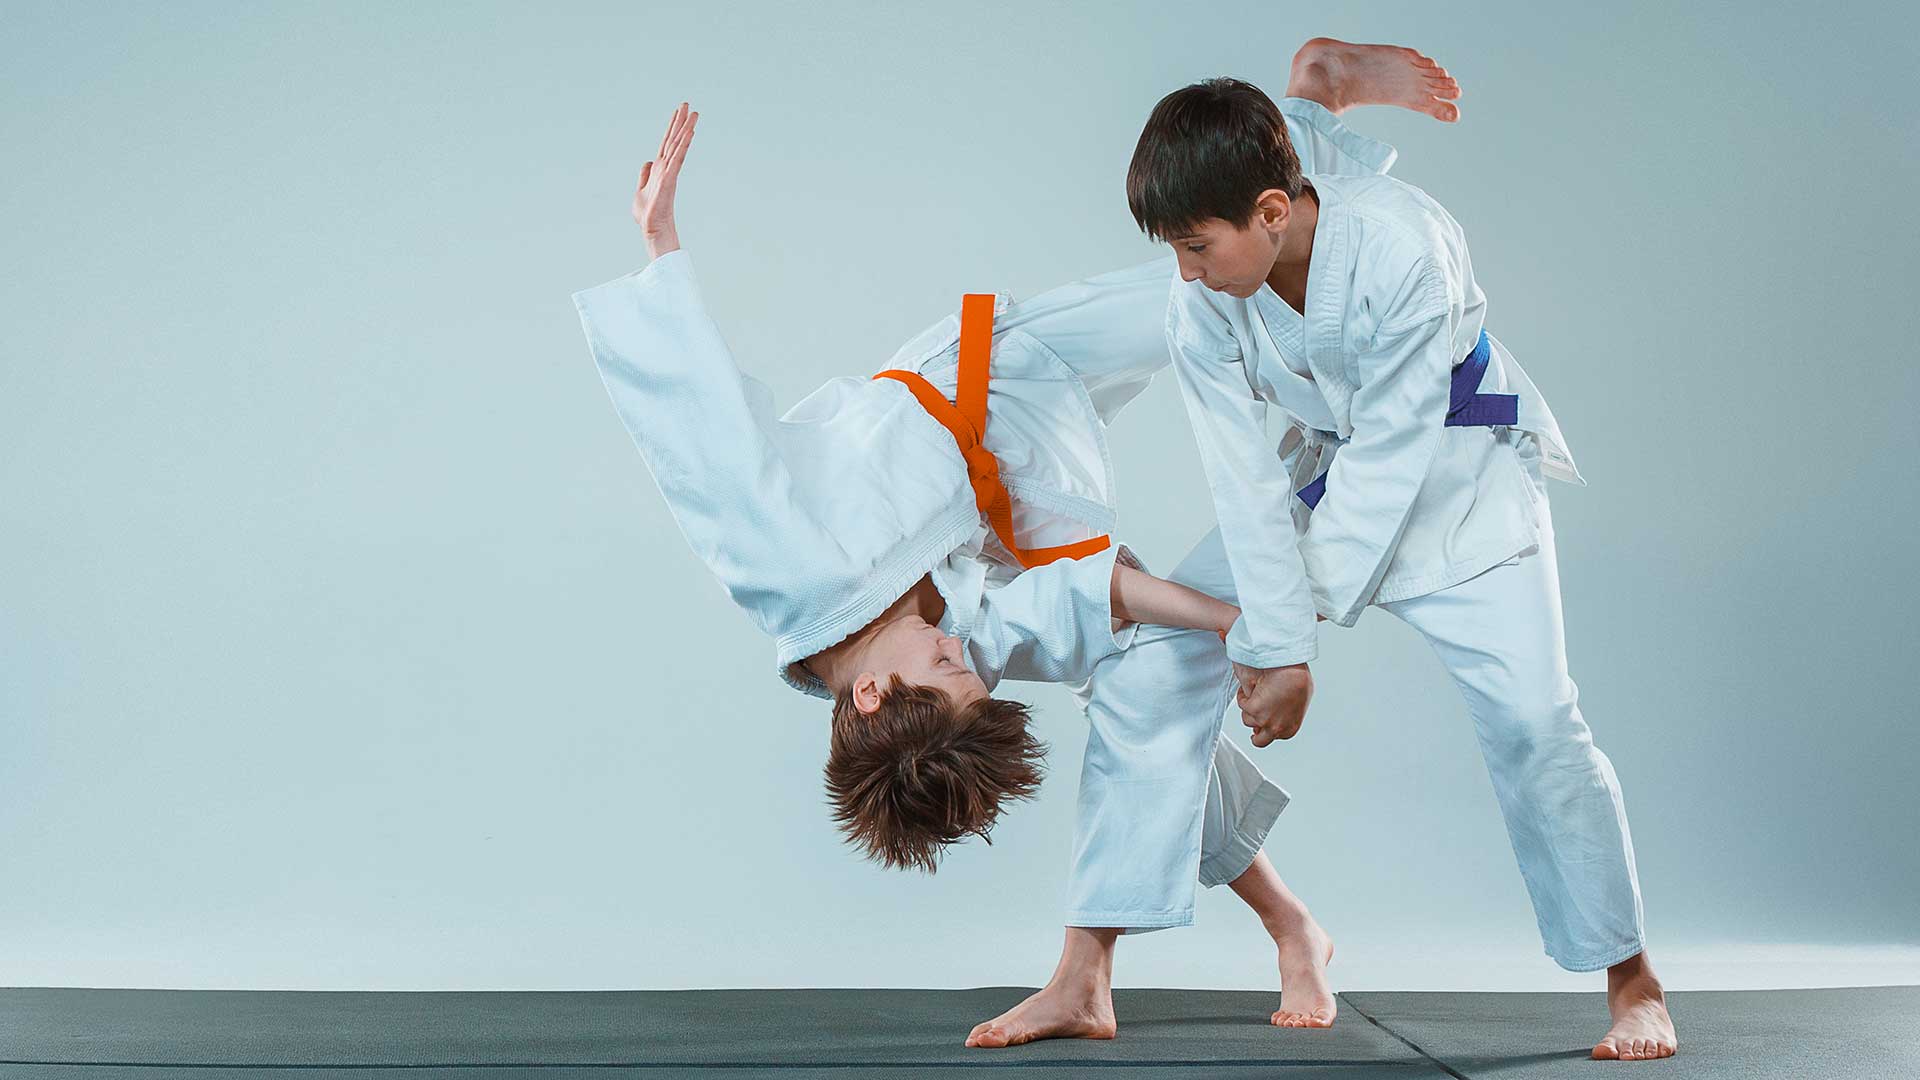 Best Martial Arts for Kids